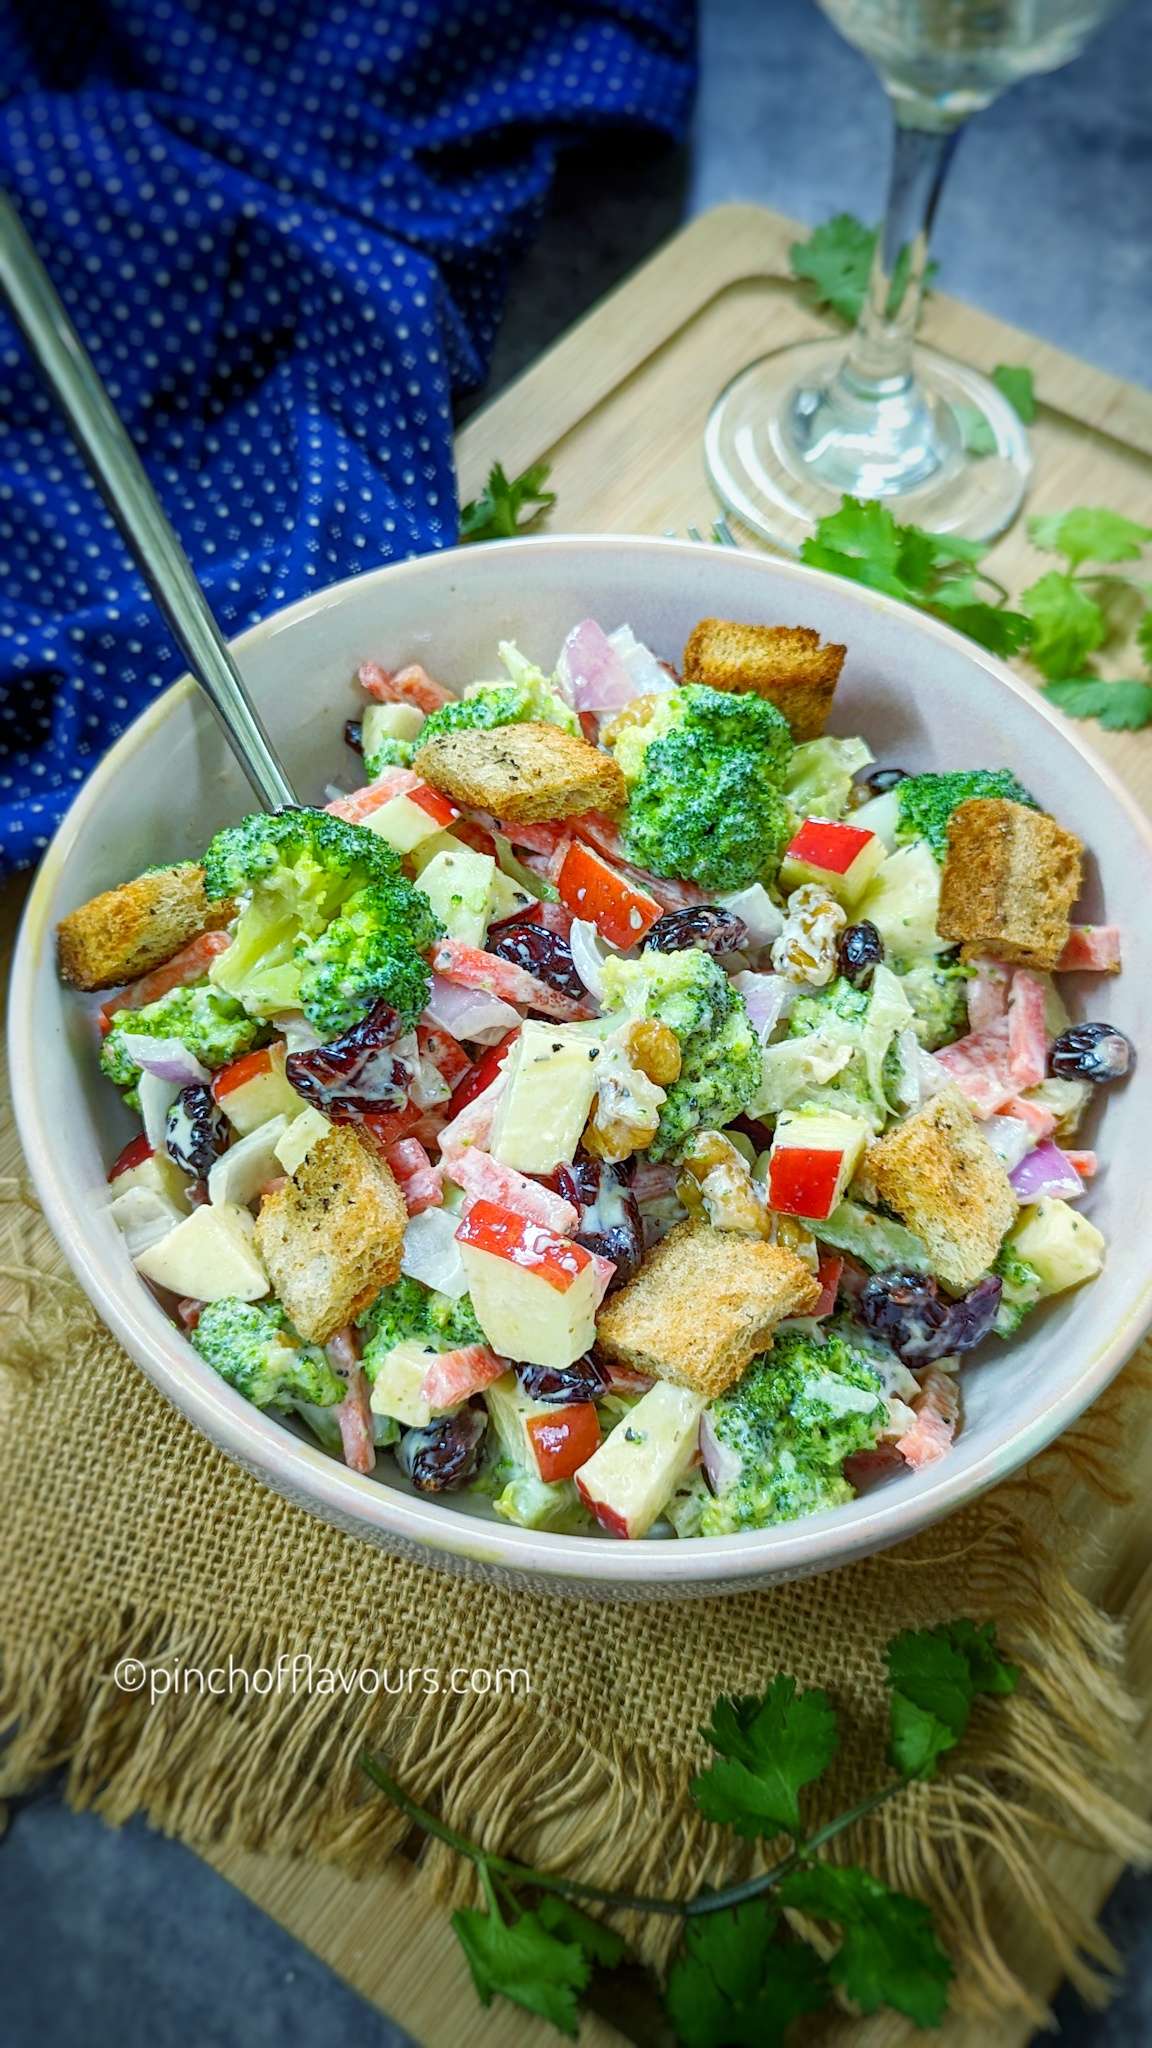 Vegan Apple Broccoli Salad Recipe